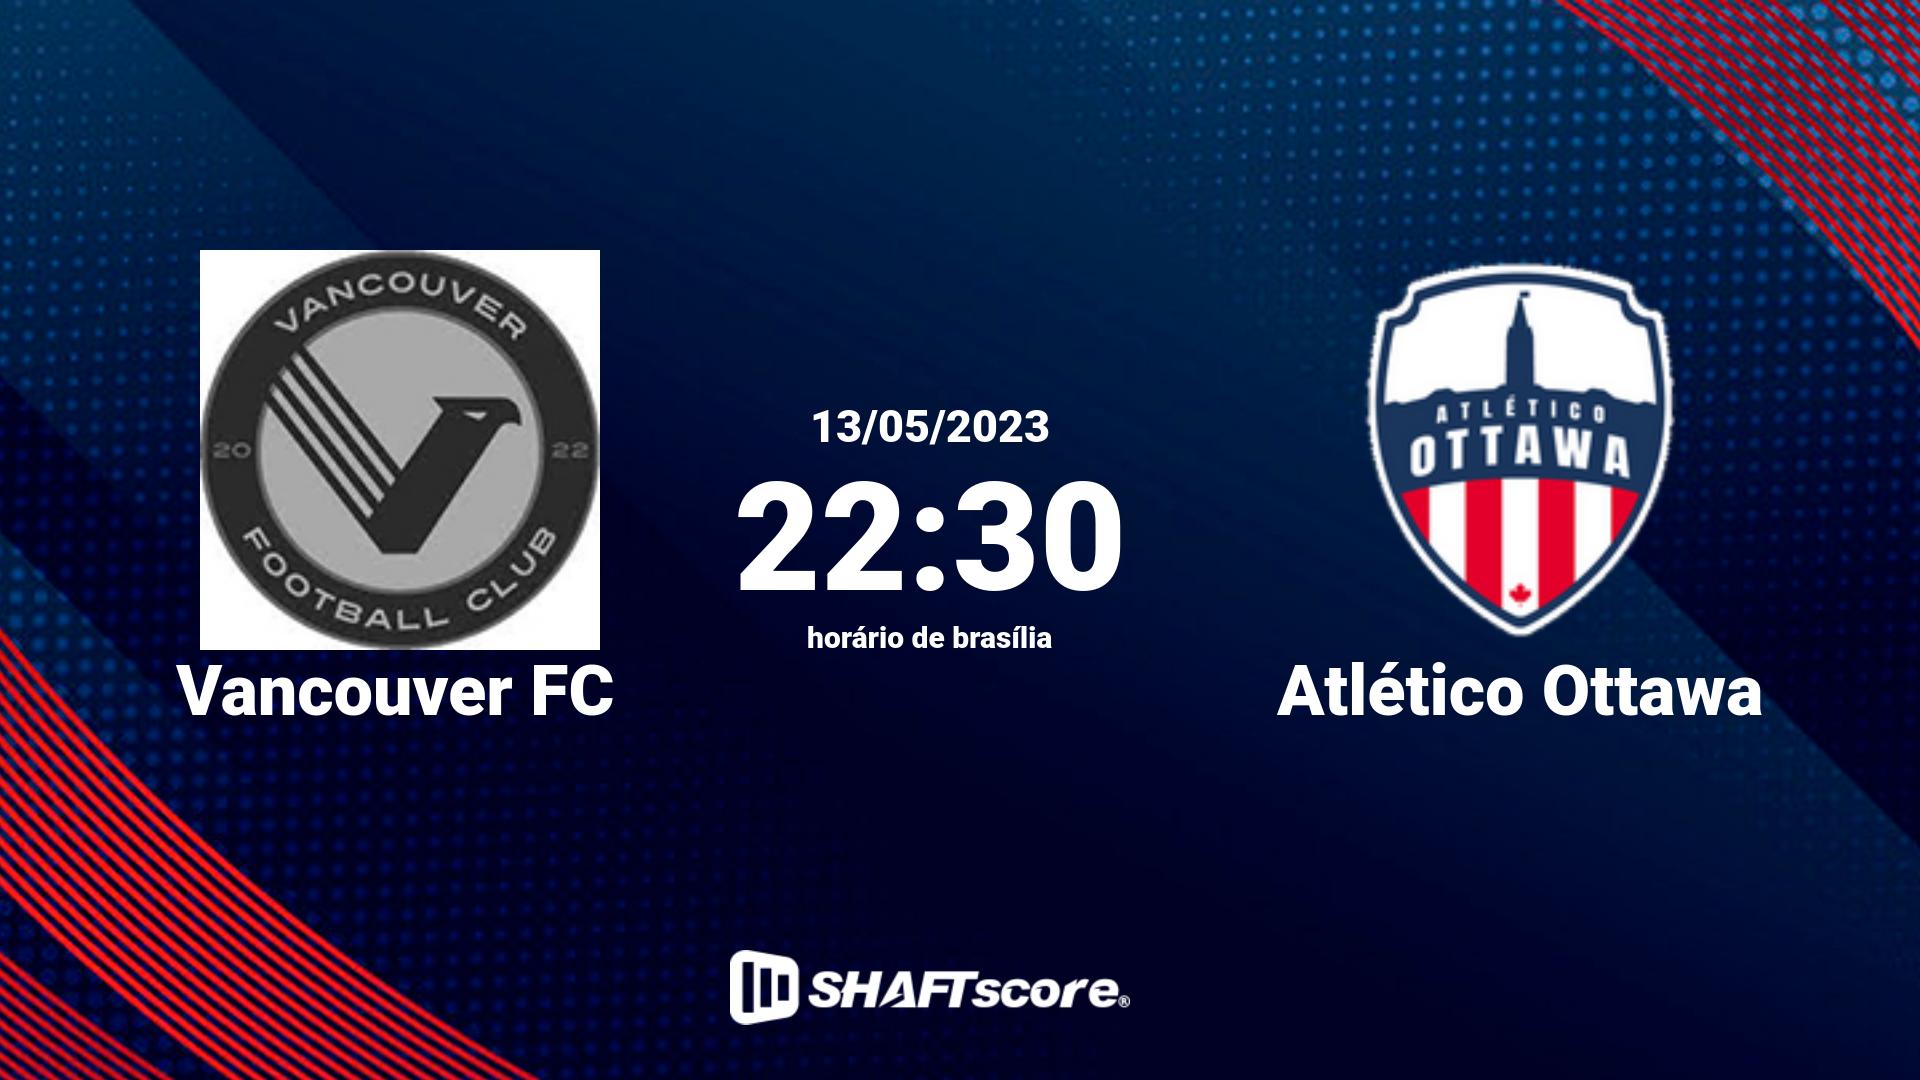 Estatísticas do jogo Vancouver FC vs Atlético Ottawa 13.05 22:30